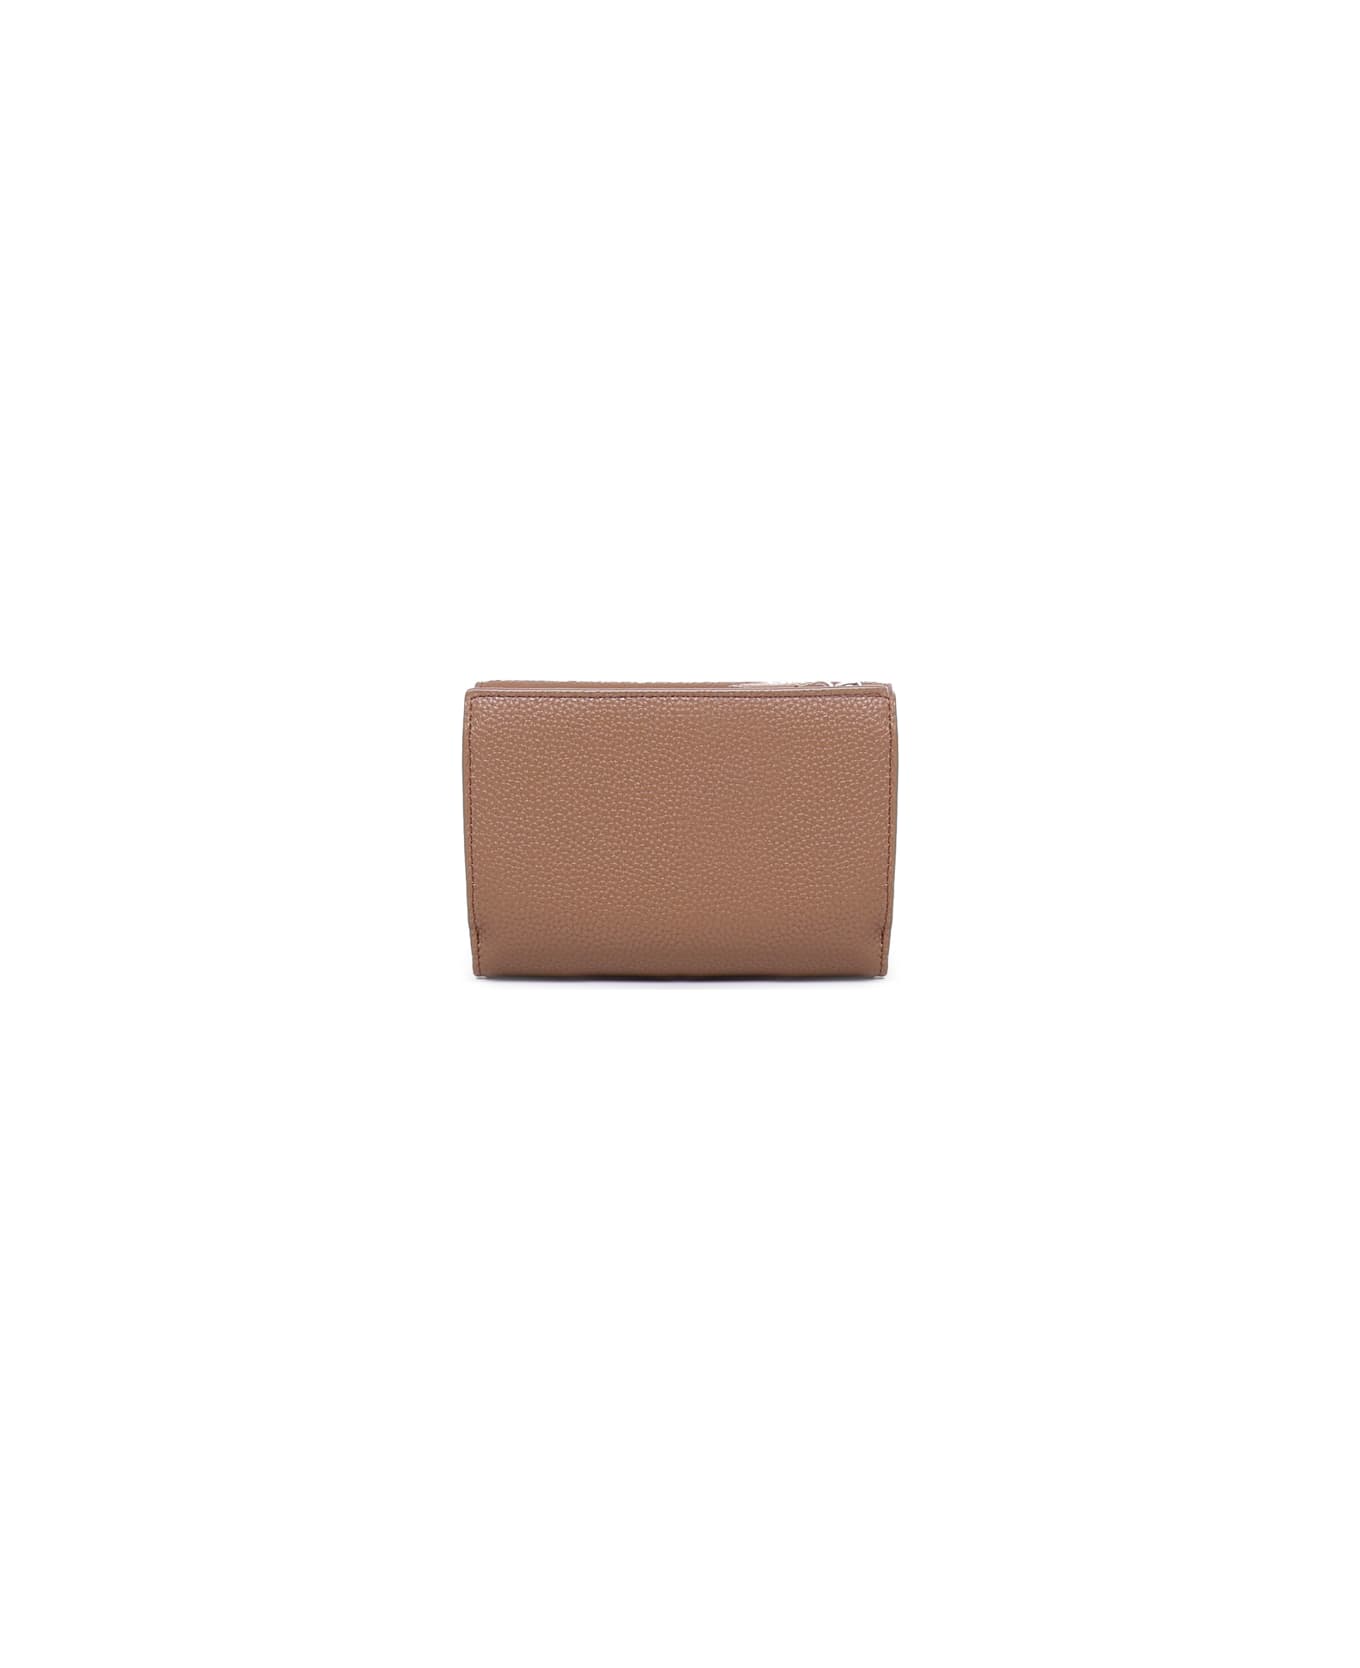 Giorgio Armani Wallet With Card Compartment And Magnetic Closure Giorgio Armani - Wood